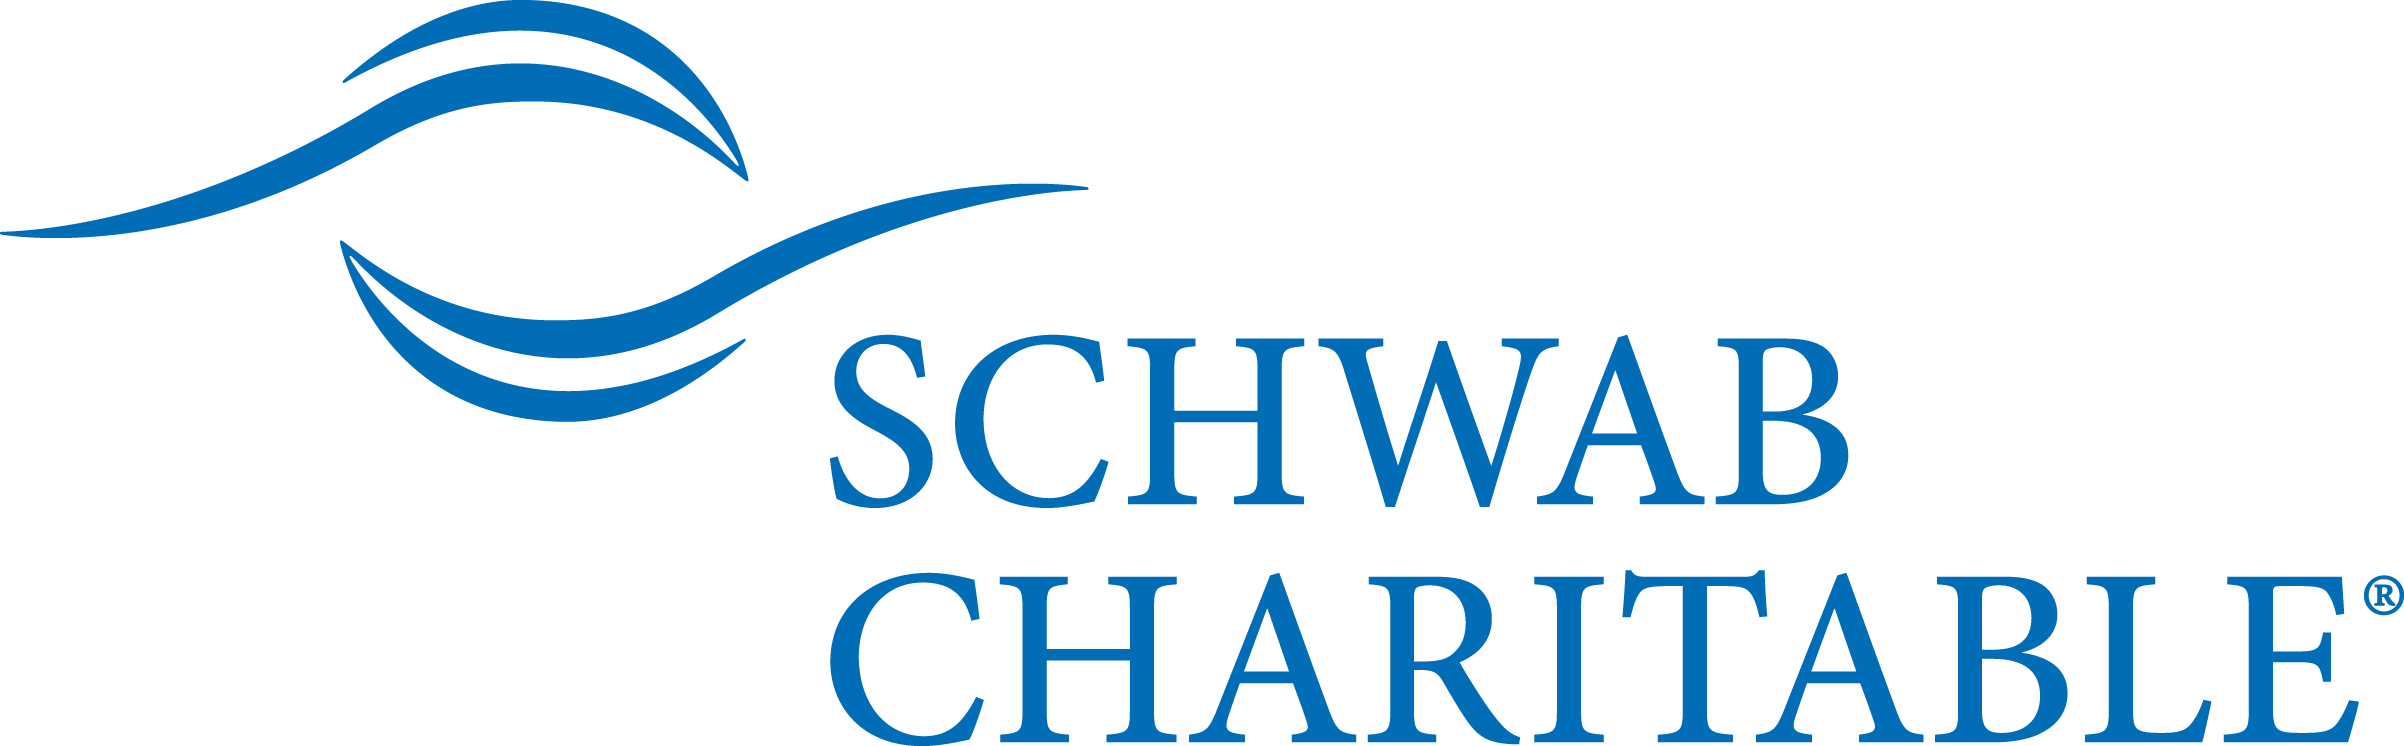 Schwab Charitable Fund New 1